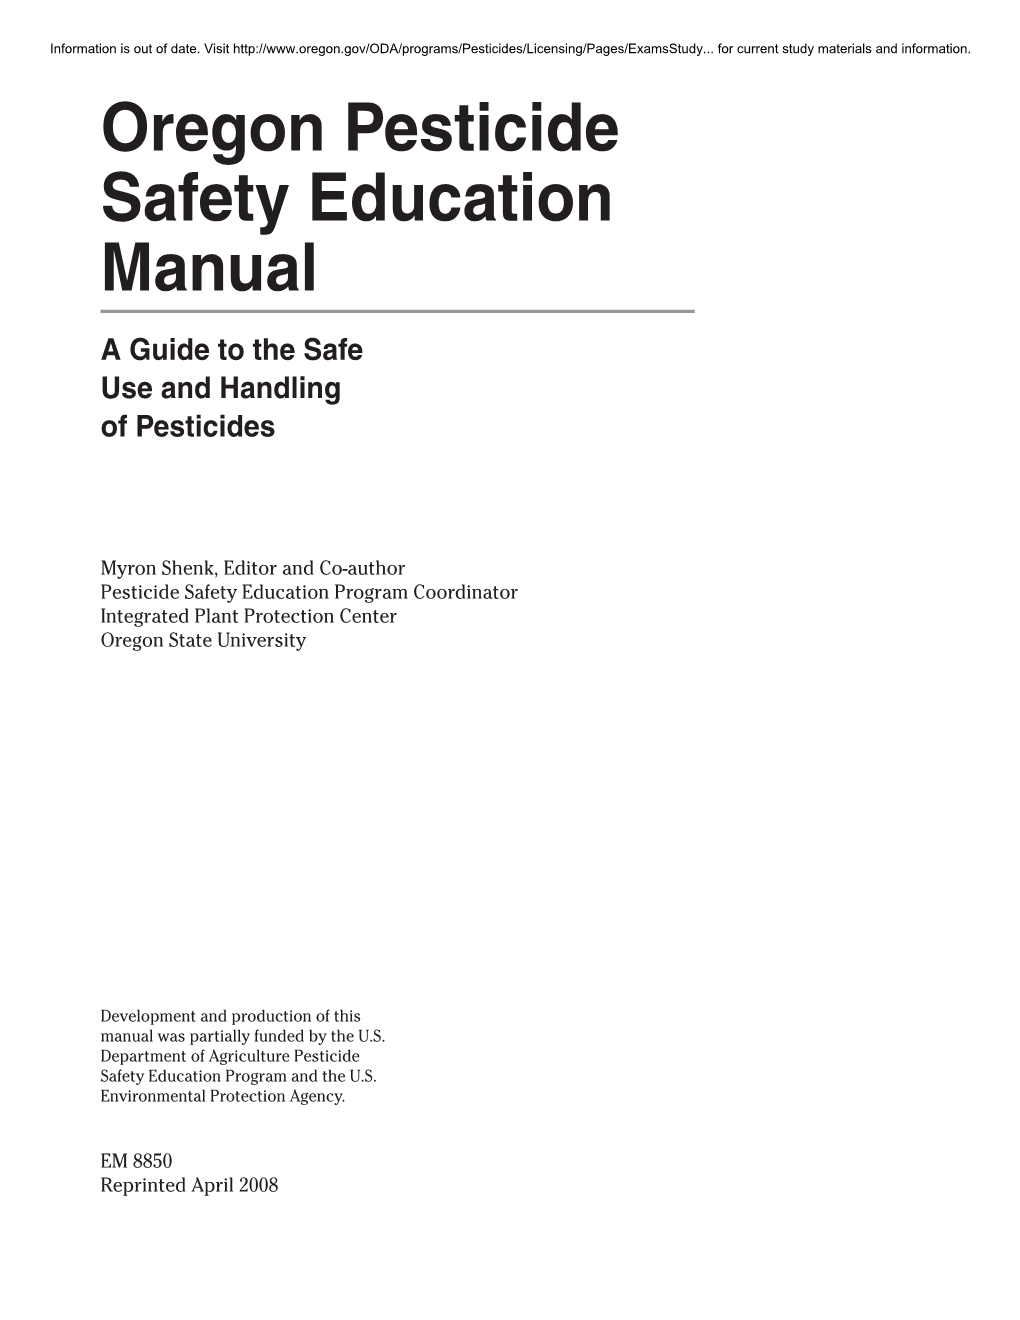 Oregon Pesticide Safety Education Manual